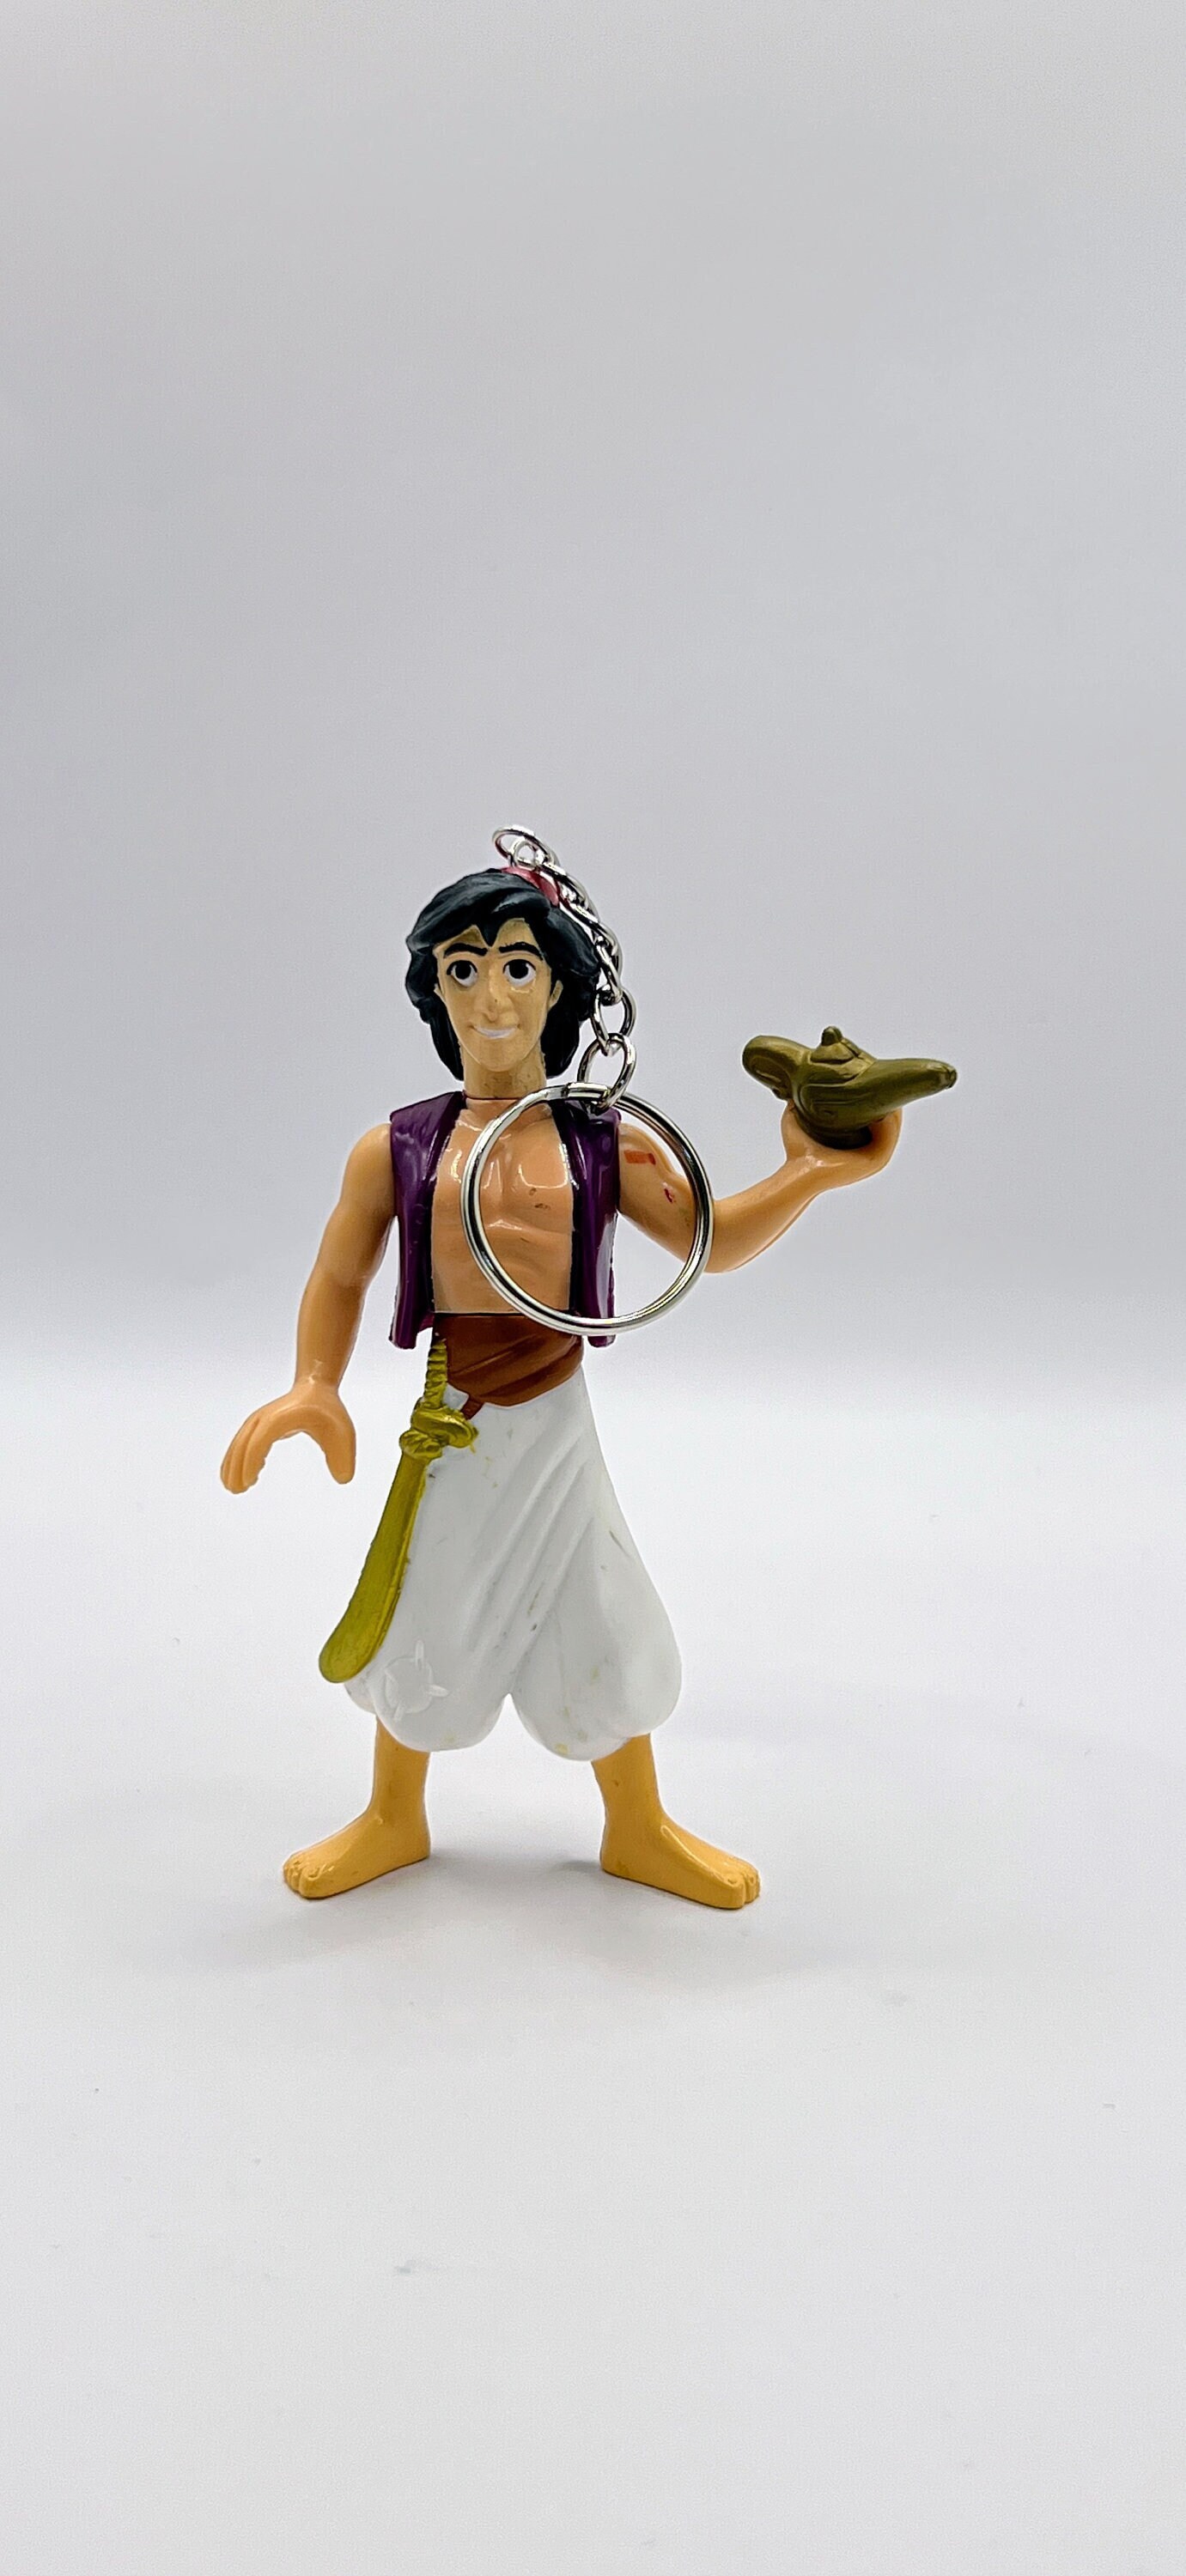 Disney Aladdin Jasmine génie jafar figurines sultan peindre les vôtres